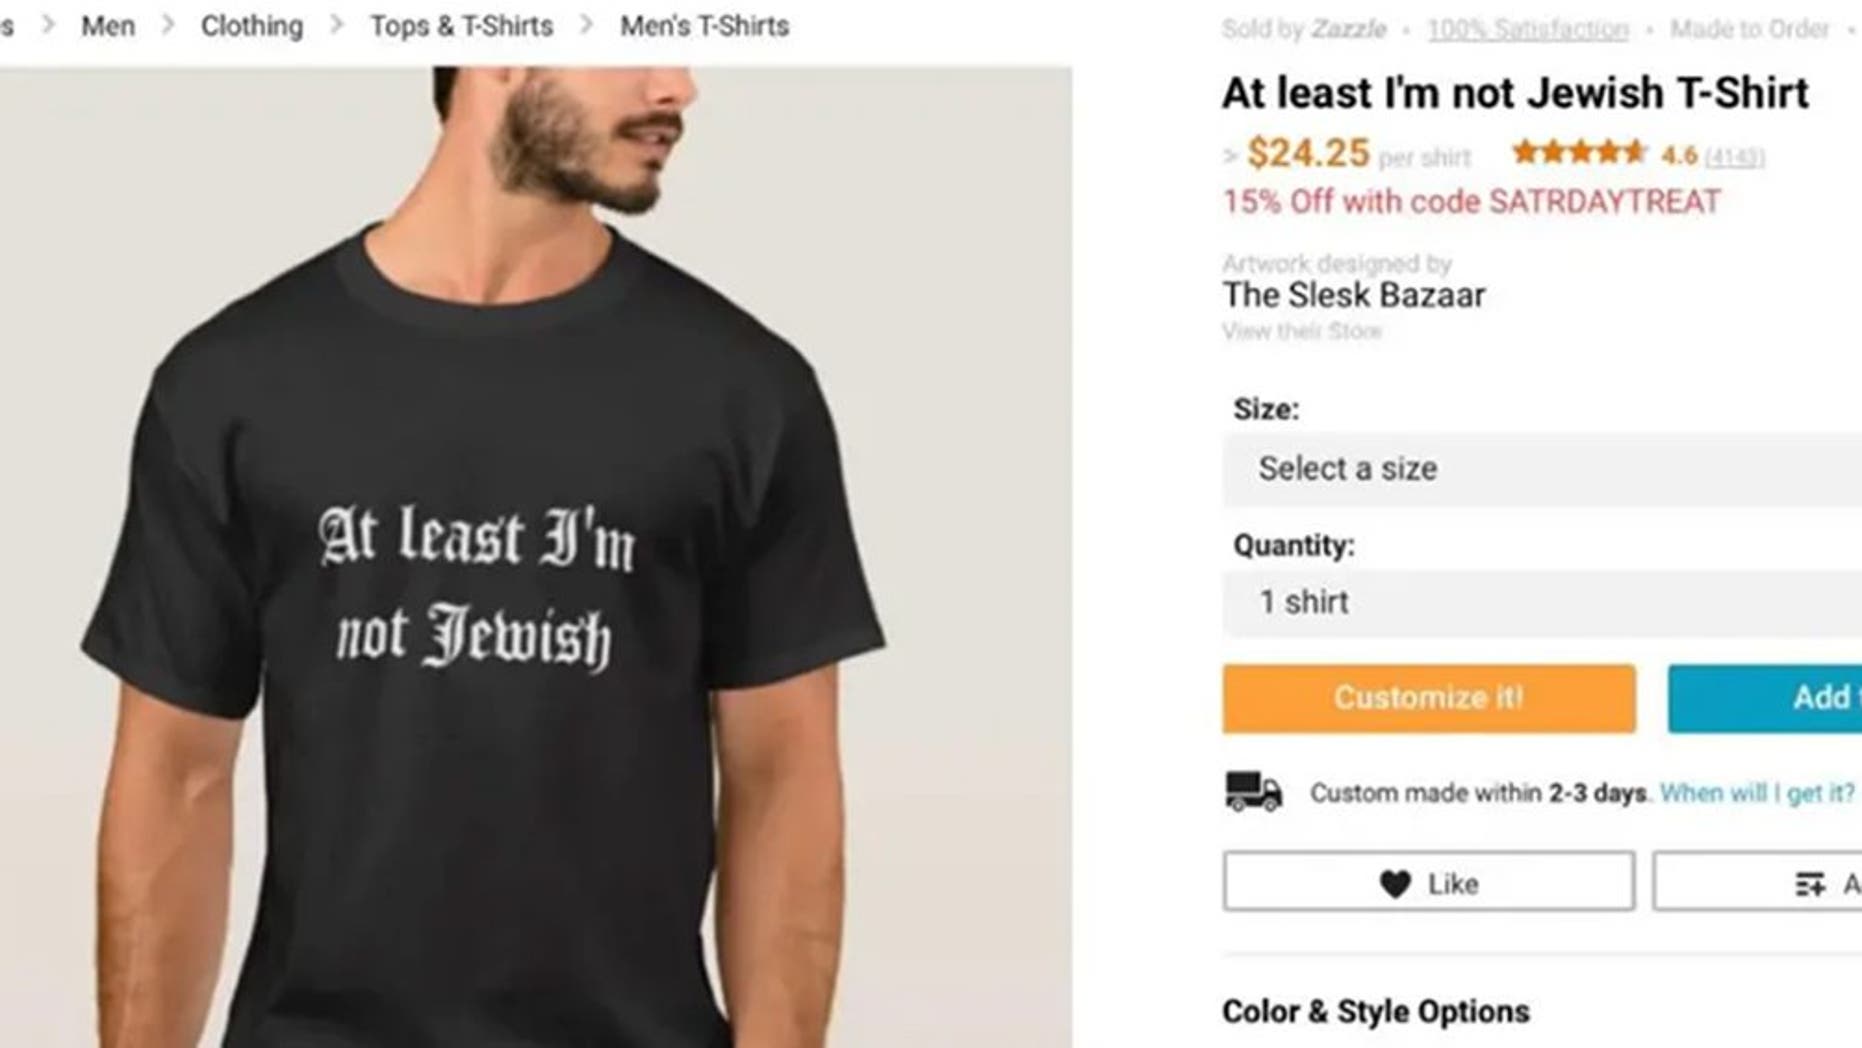 Online retailer pulls anti-Semitic shirt after social media backlash